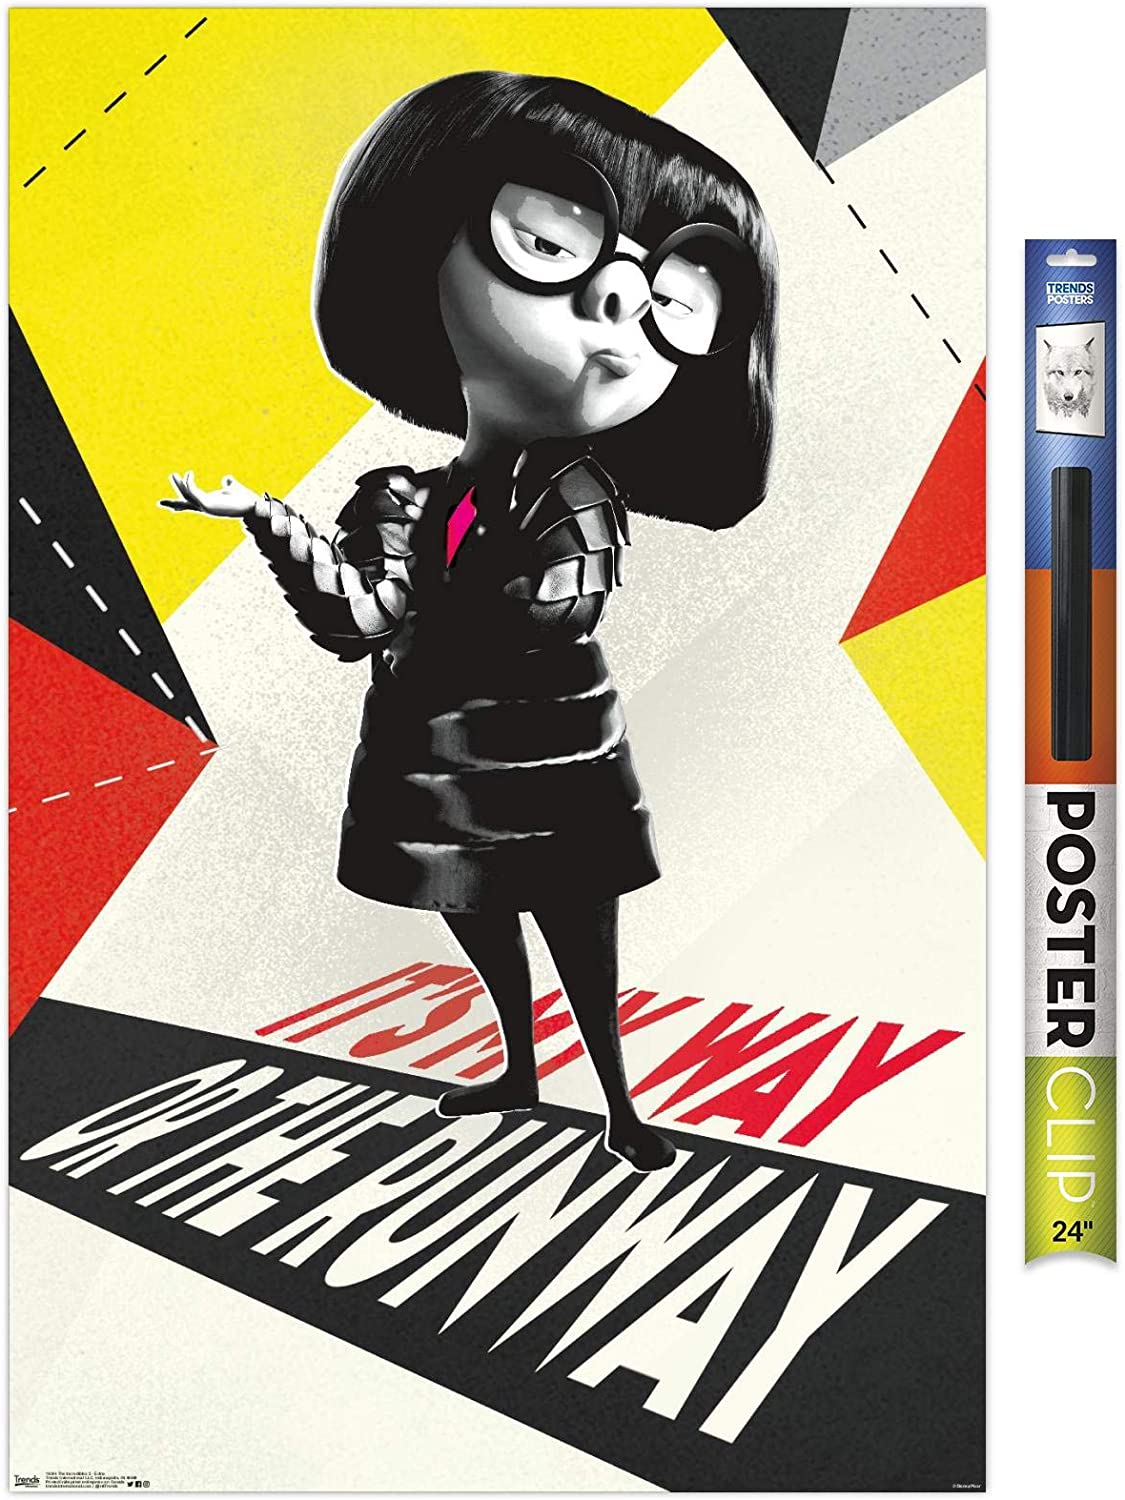 Pixar Incredibles 2 All Character Poster Wallpapers